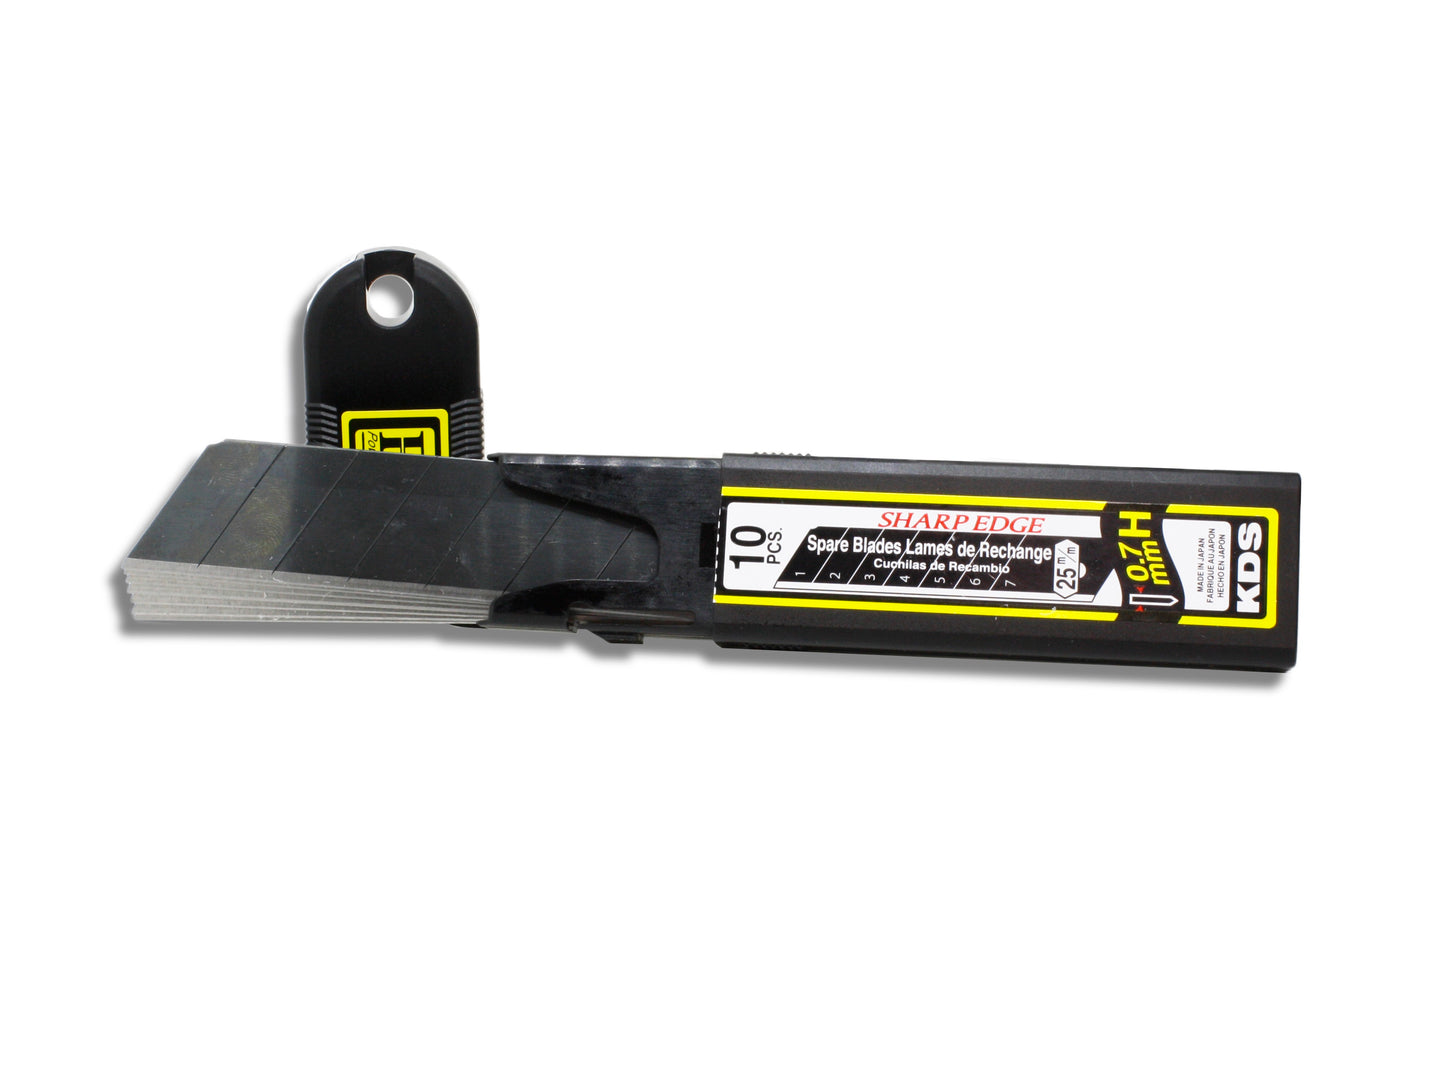 Tradegear Online's KDS 25mm EVO Black Blades in open storage case with 10x blades visible